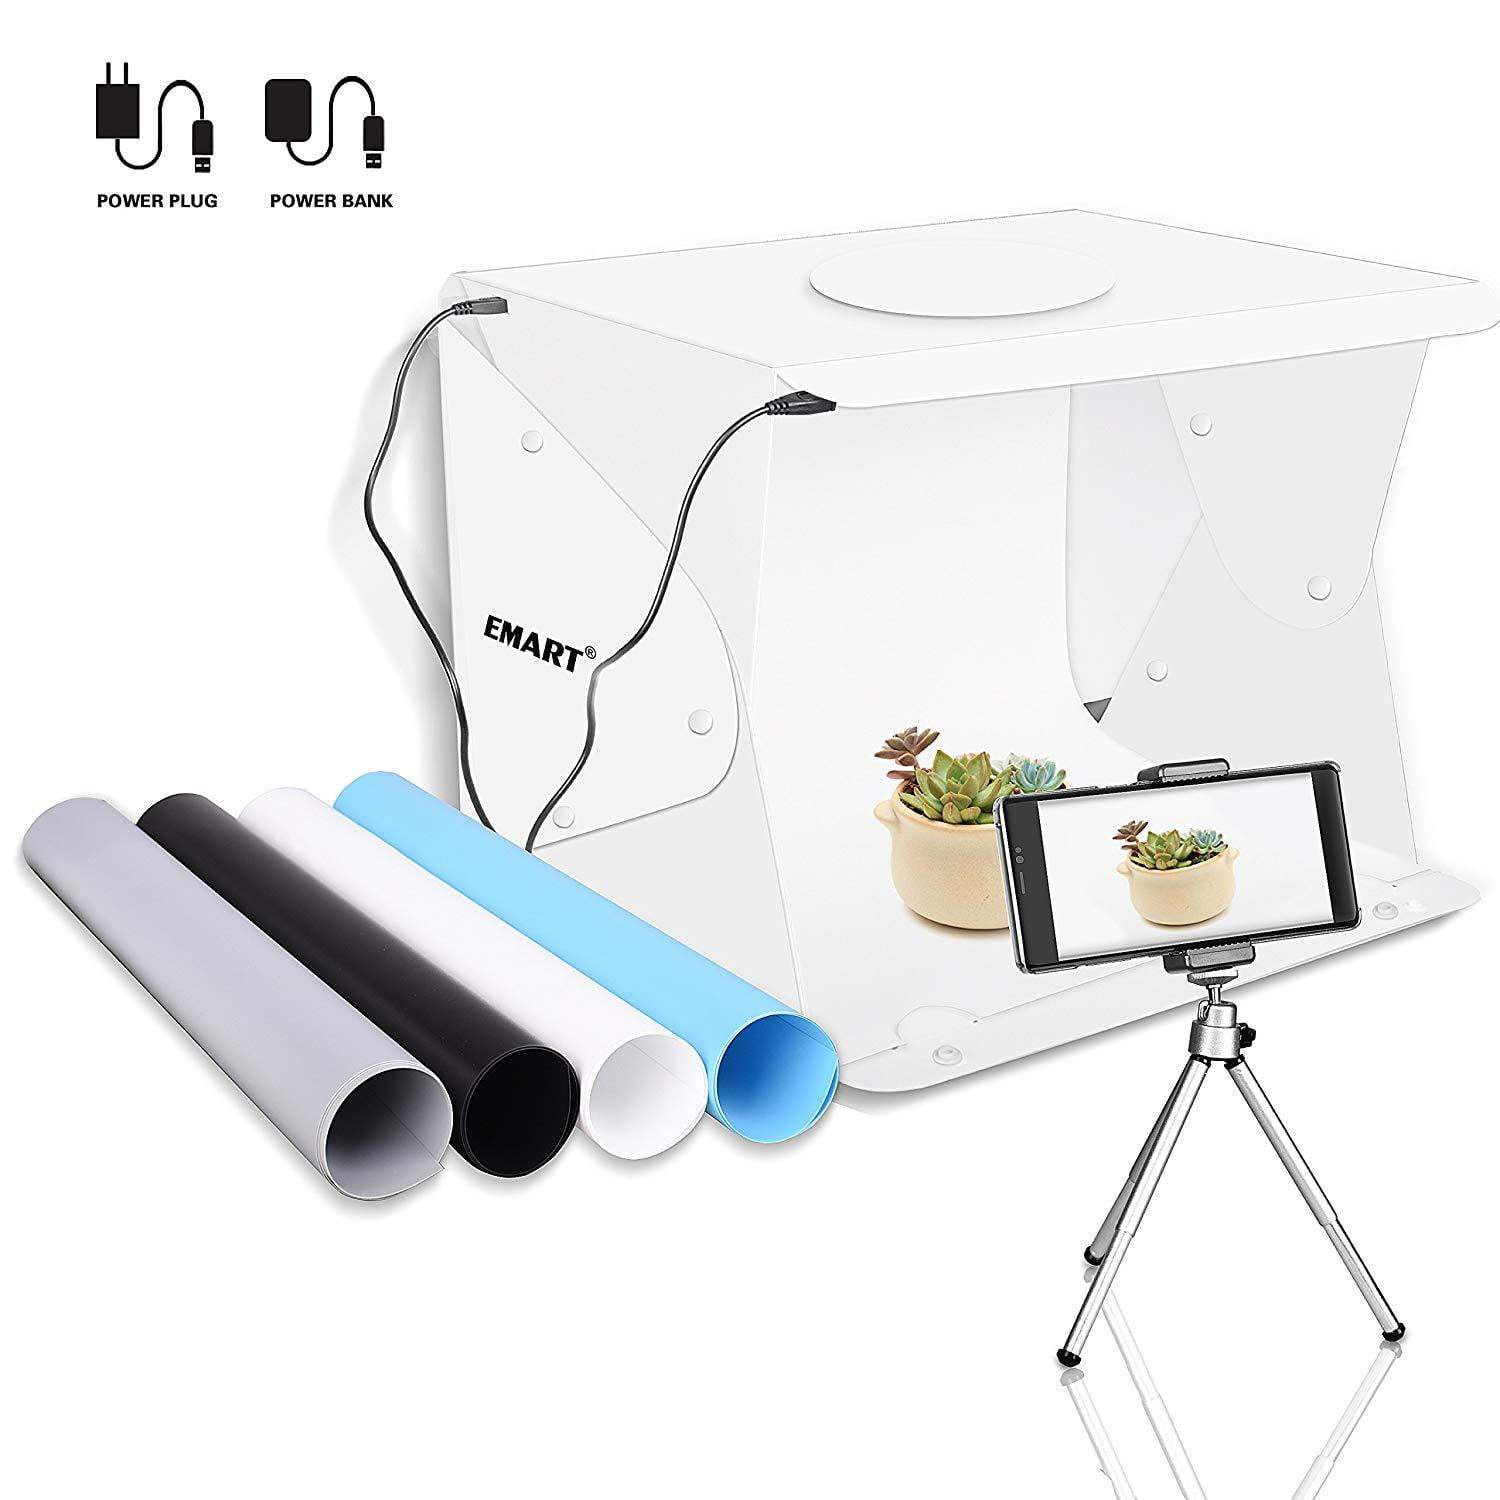 EMART 14" x 16" Photography Table Top Light Shooting Tent - EMART INTERNATIONAL, INC (Official Website)